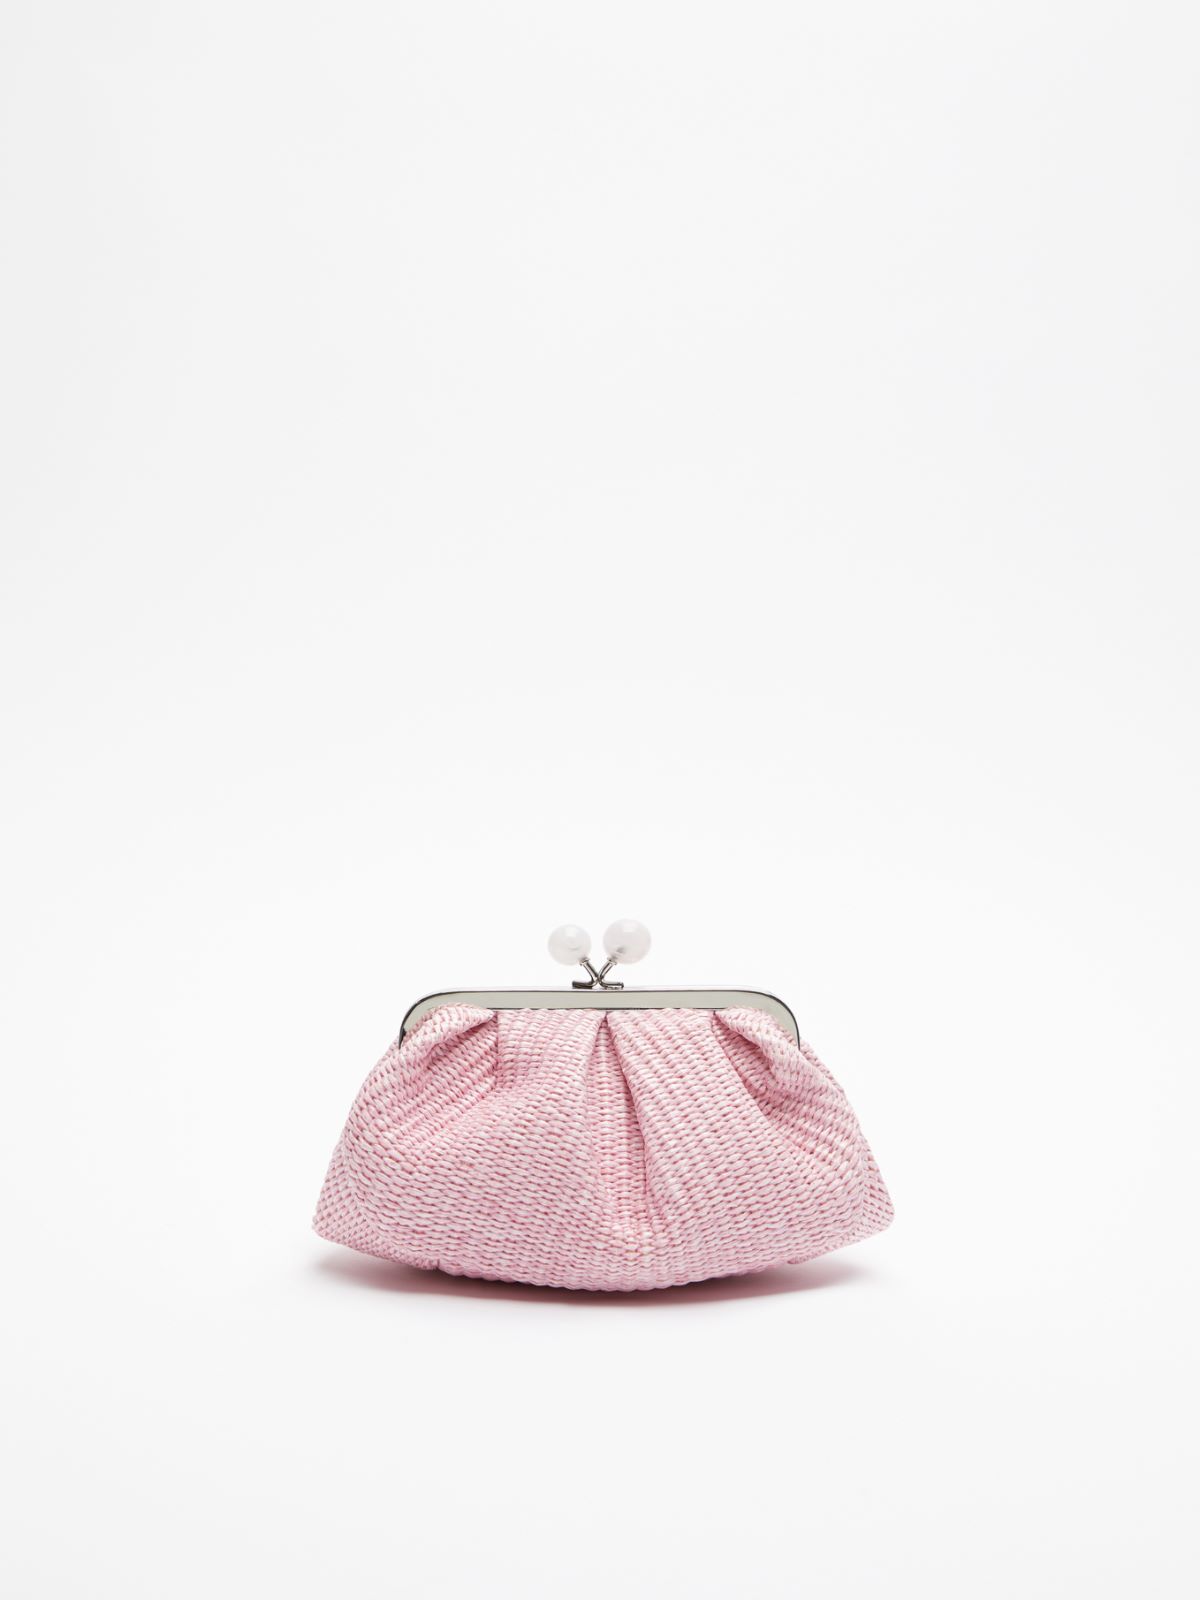 Small Pasticcino Bag in raffia - PINK - Weekend Max Mara - 3